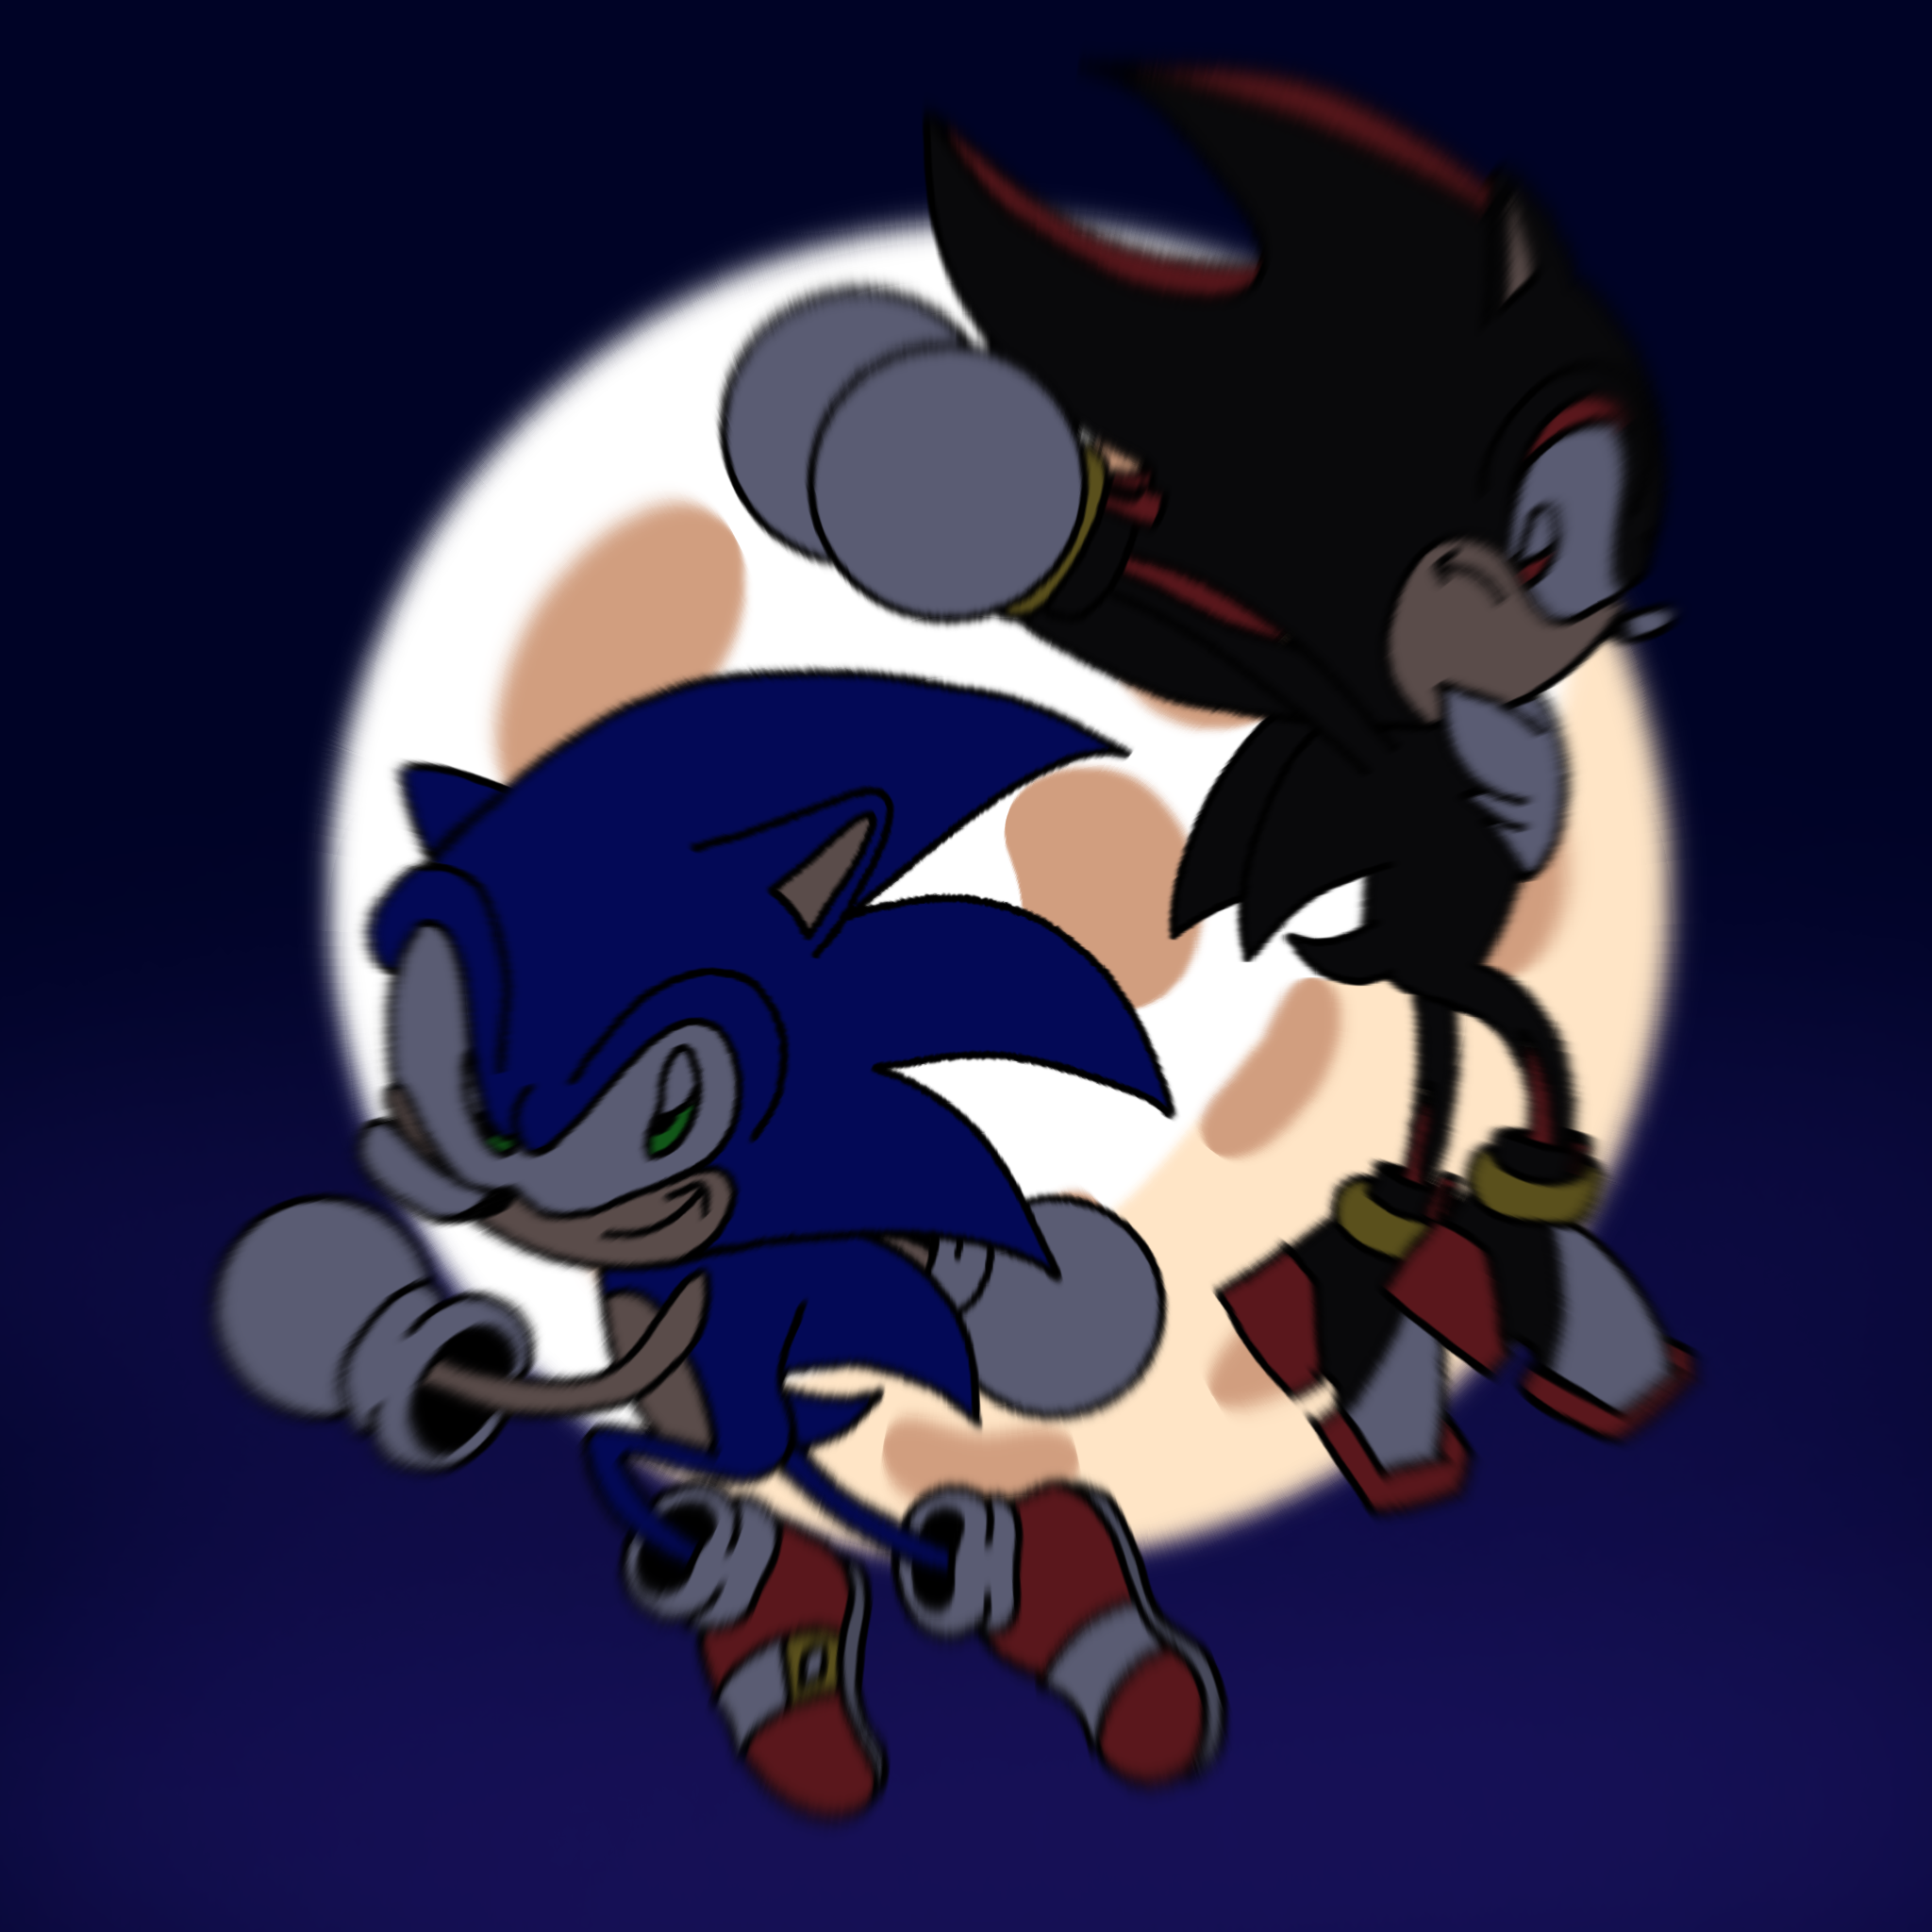 Shadow (Sonic adventure 2) by artsonx on DeviantArt